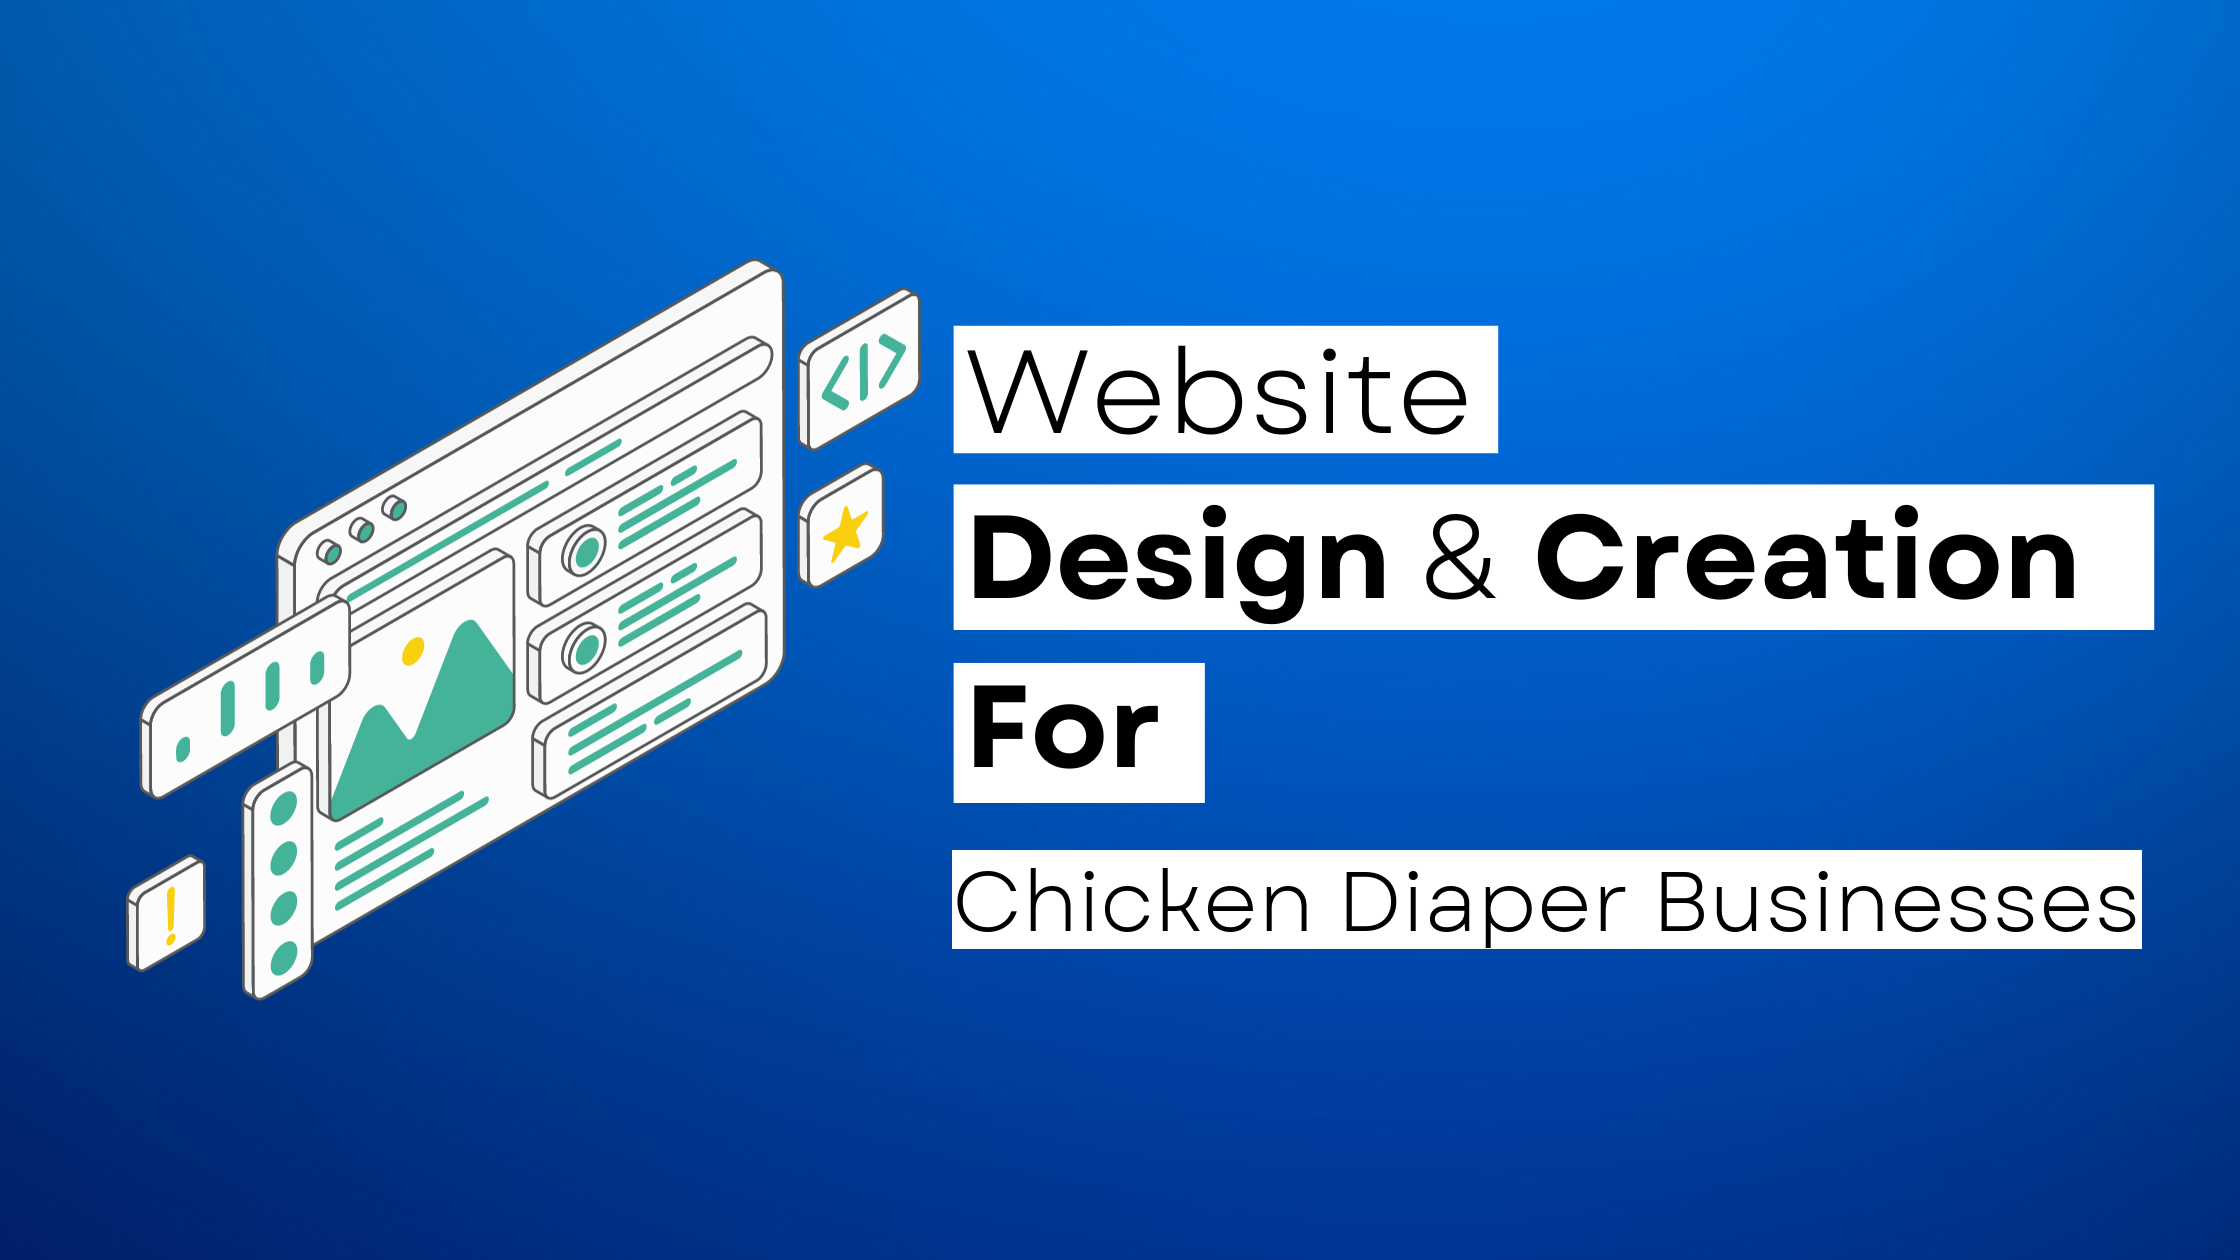 How to start a Chicken Diaper website